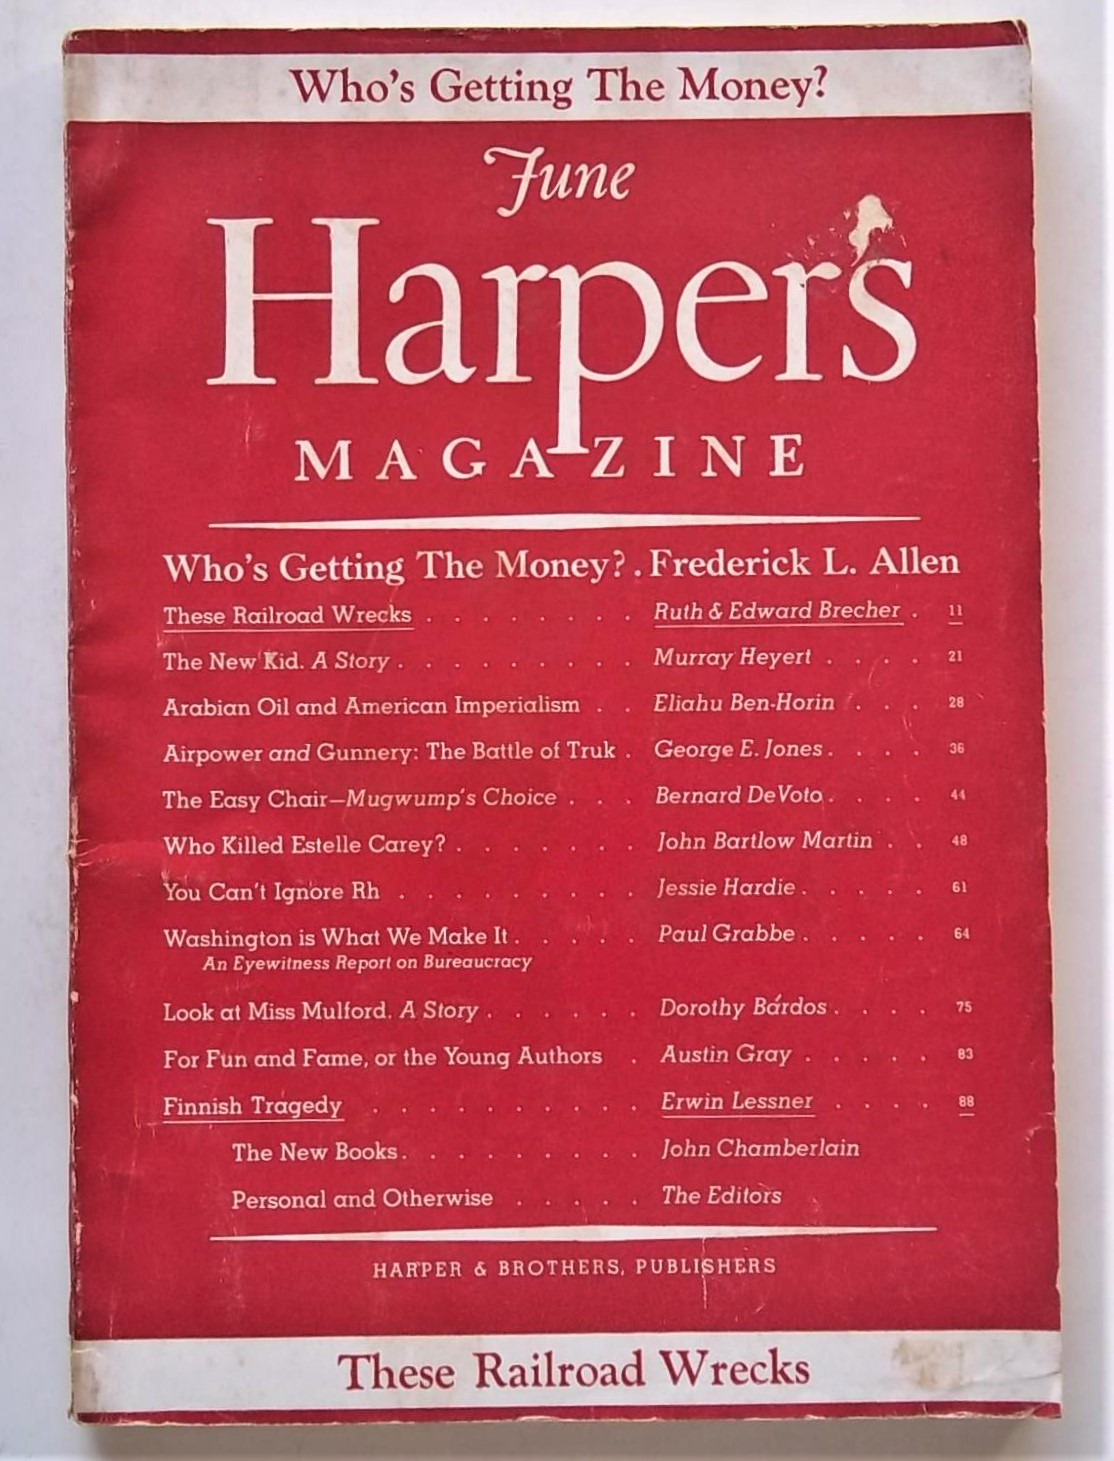 harper's magazine book reviews